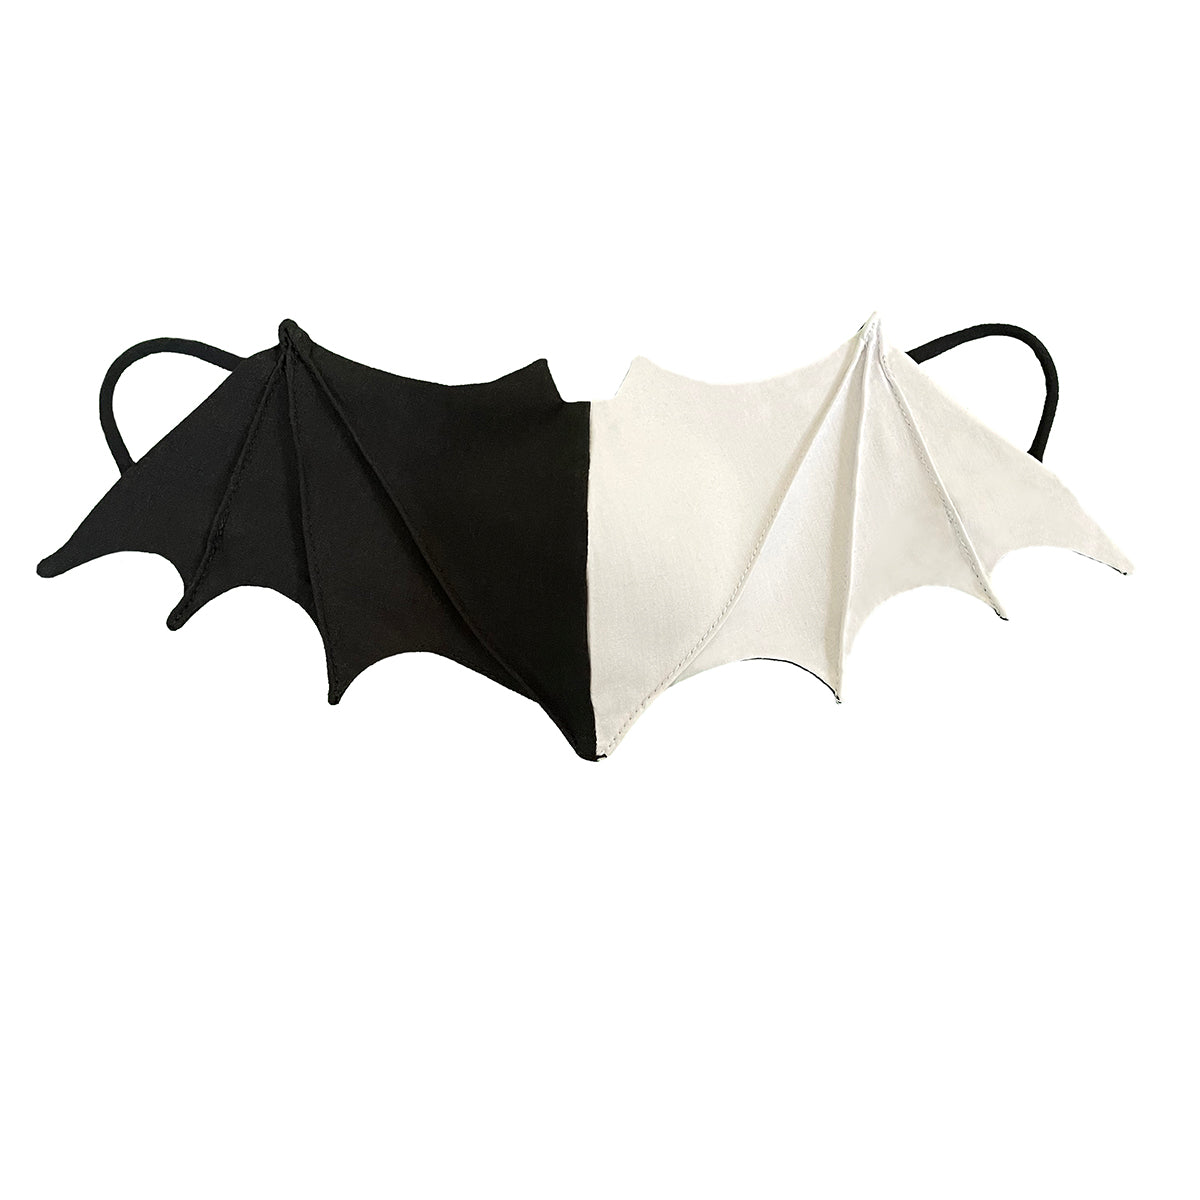 Harlequin Two-Tone Bat Mask